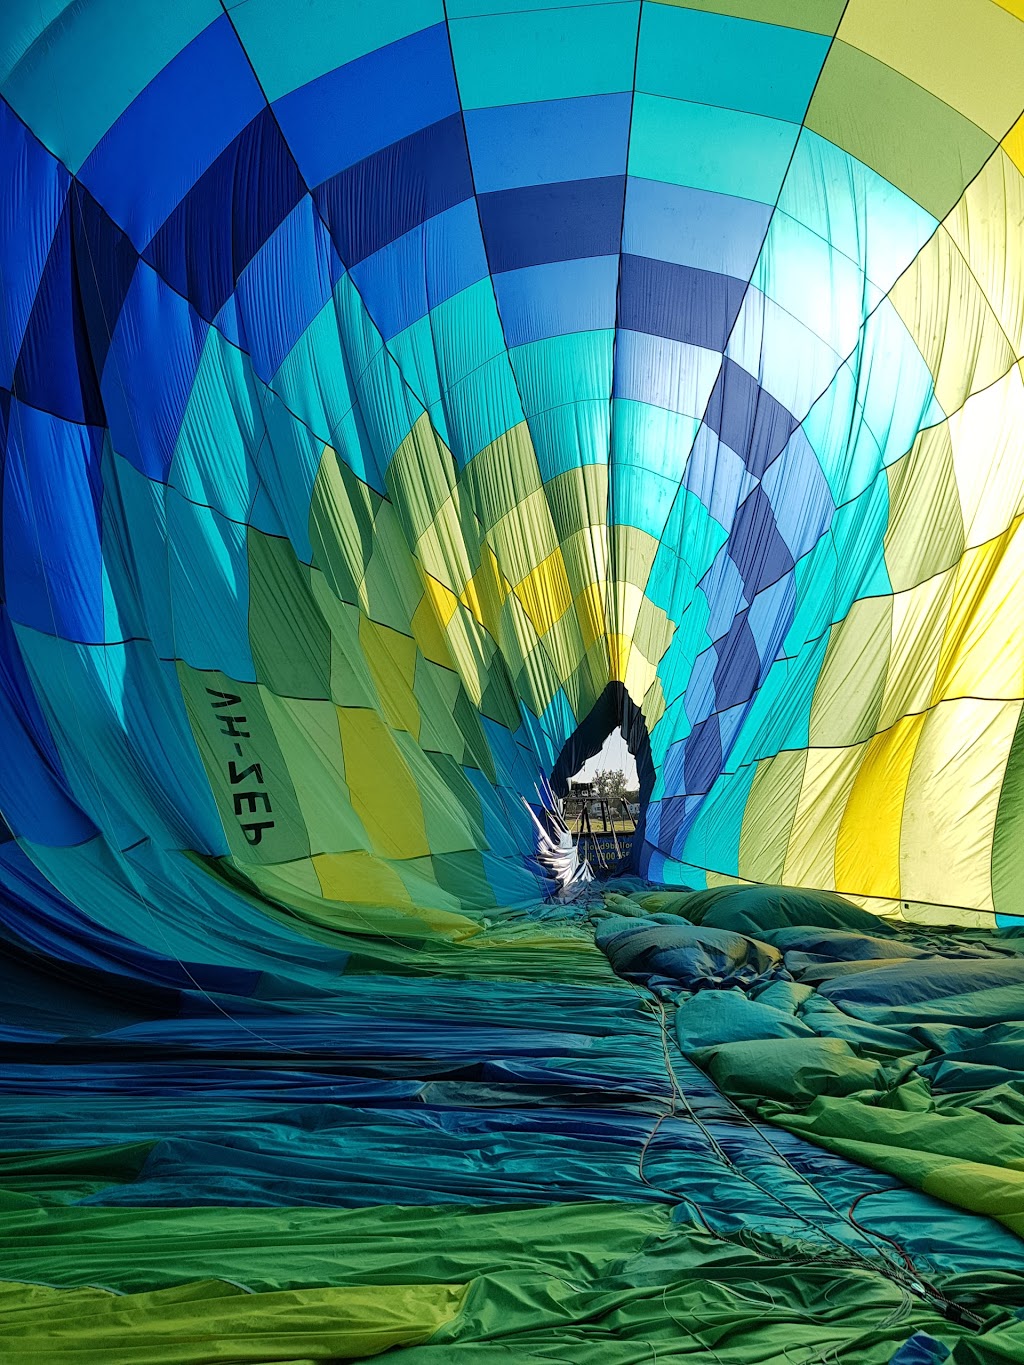 Cloud 9 Balloon Flights Pty Ltd | Meeting at The Crowne Plaza Hawkesbury Valley, 61 Hawkesbury Valley Way, Windsor NSW 2753, Australia | Phone: 1300 555 711